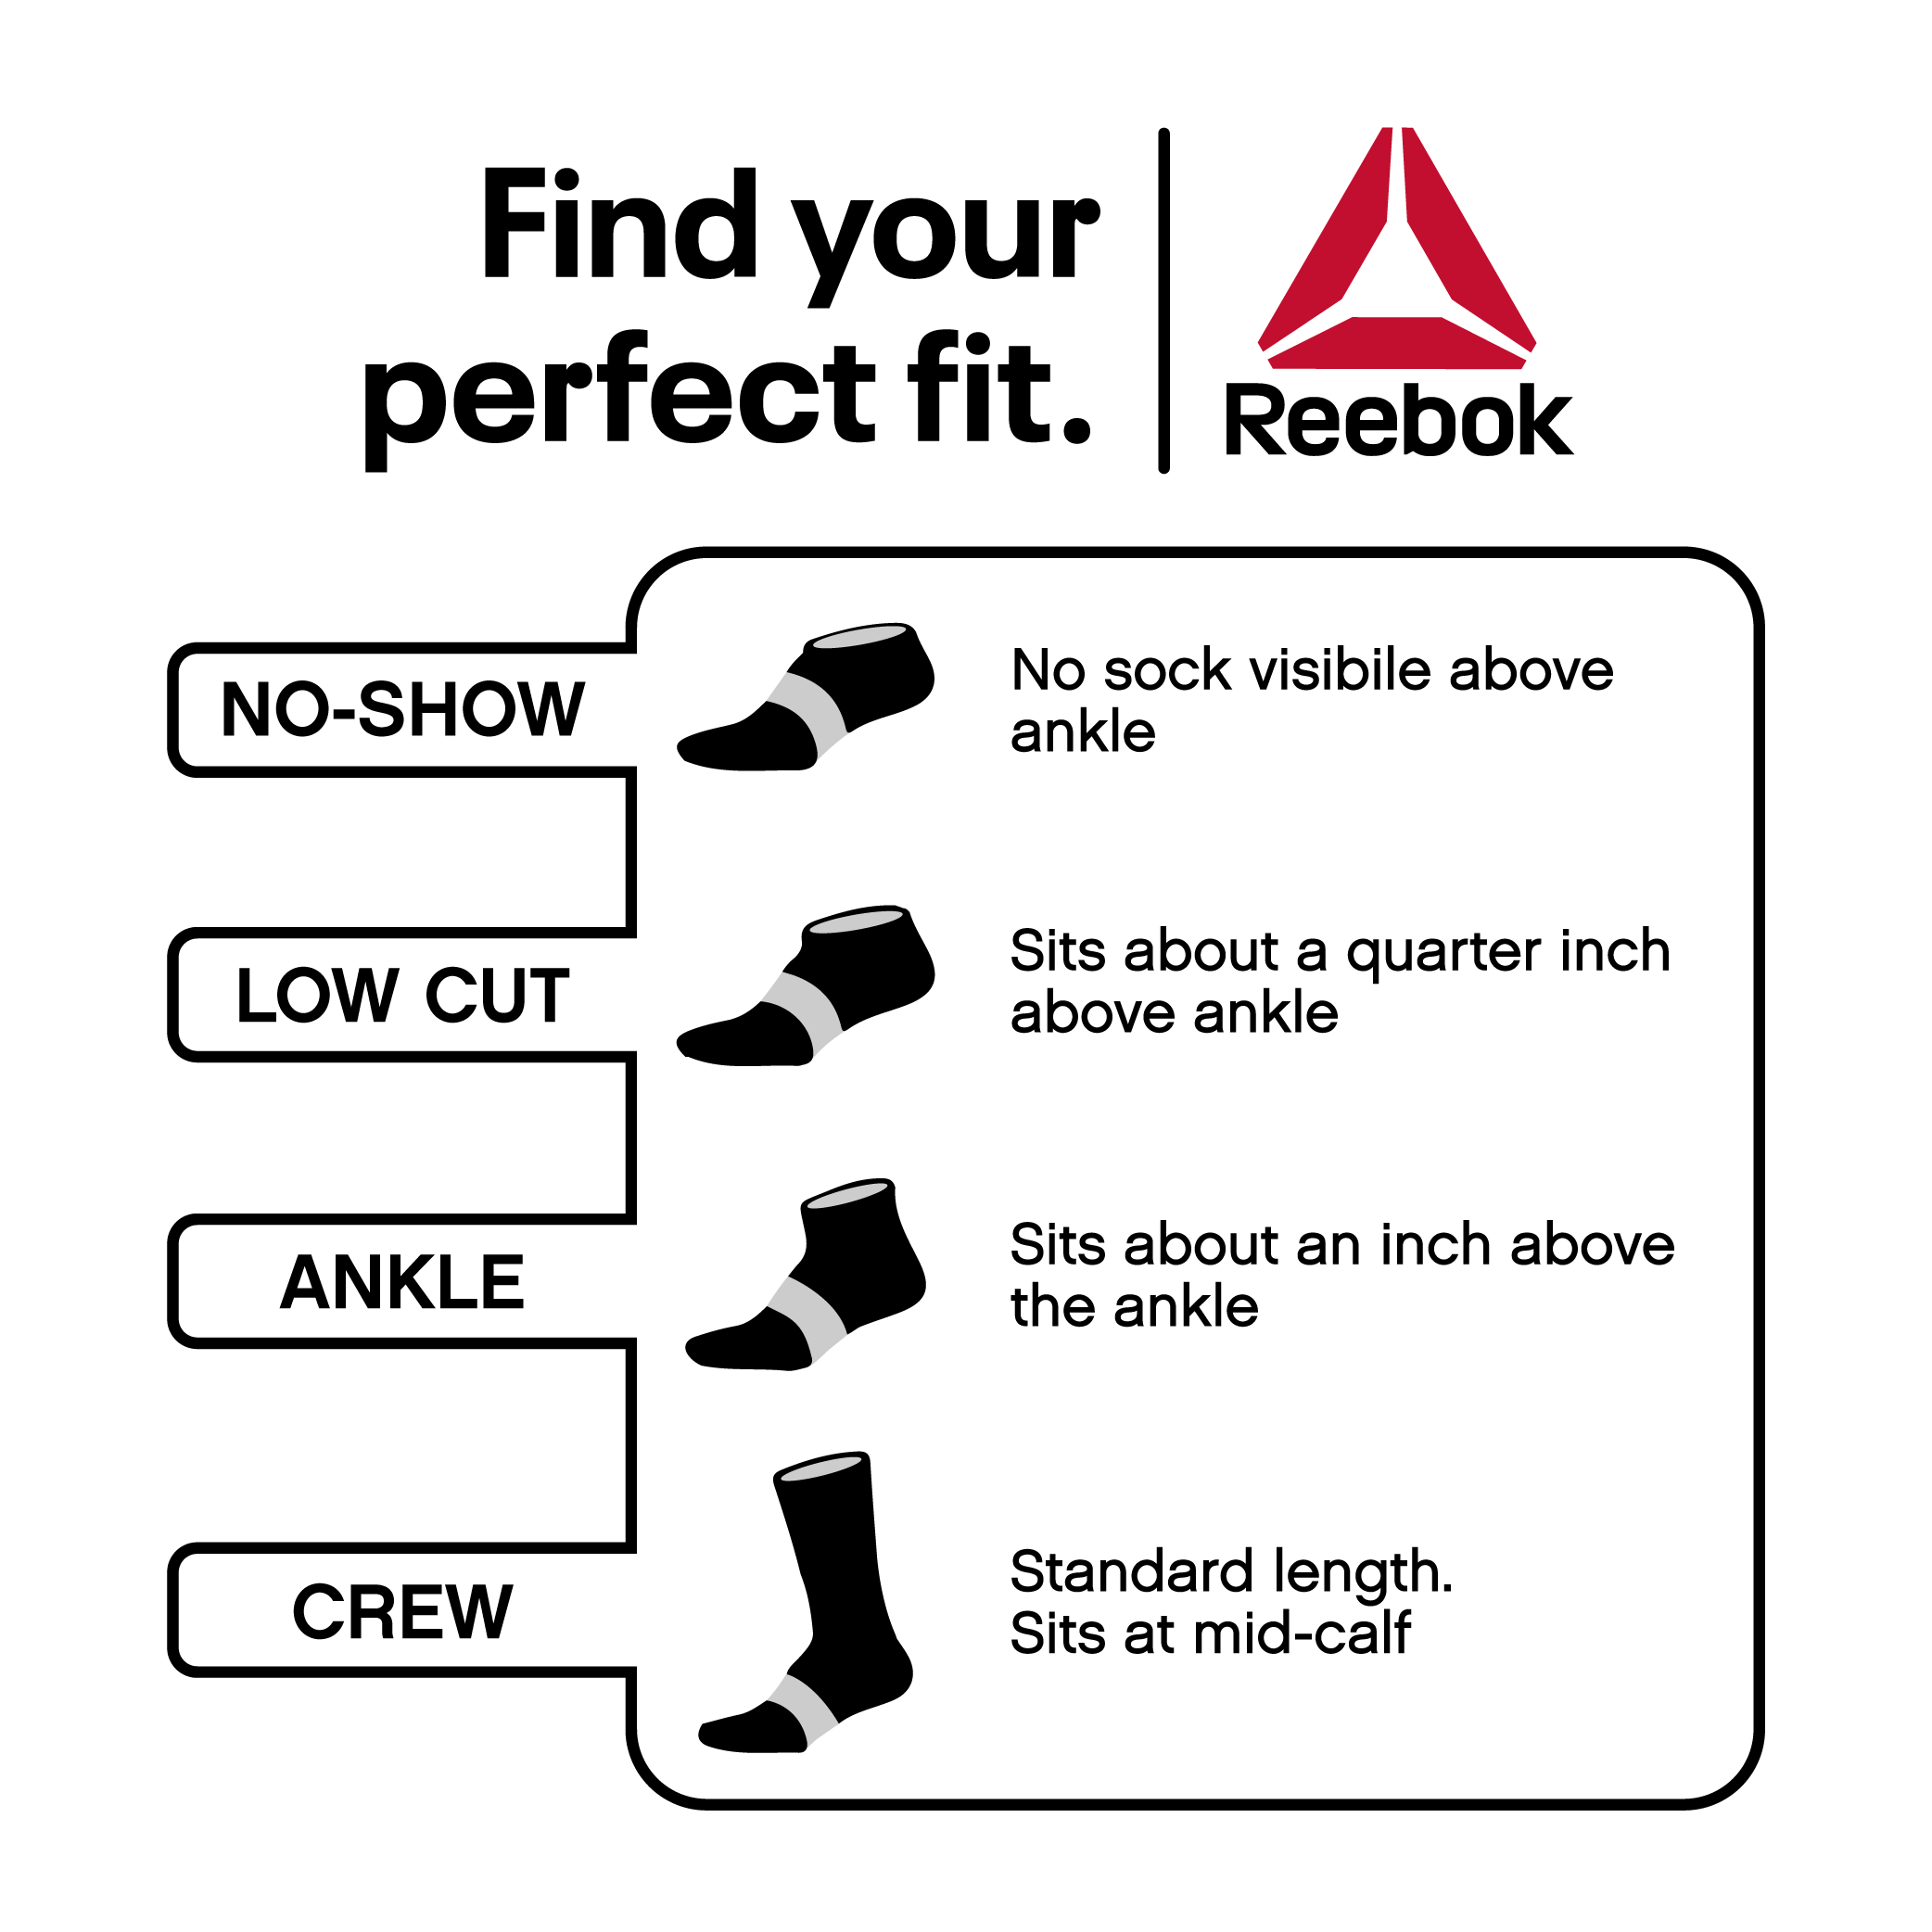 Reebok Men's Pro Series Low Cut Socks, 6-Pack - image 5 of 8